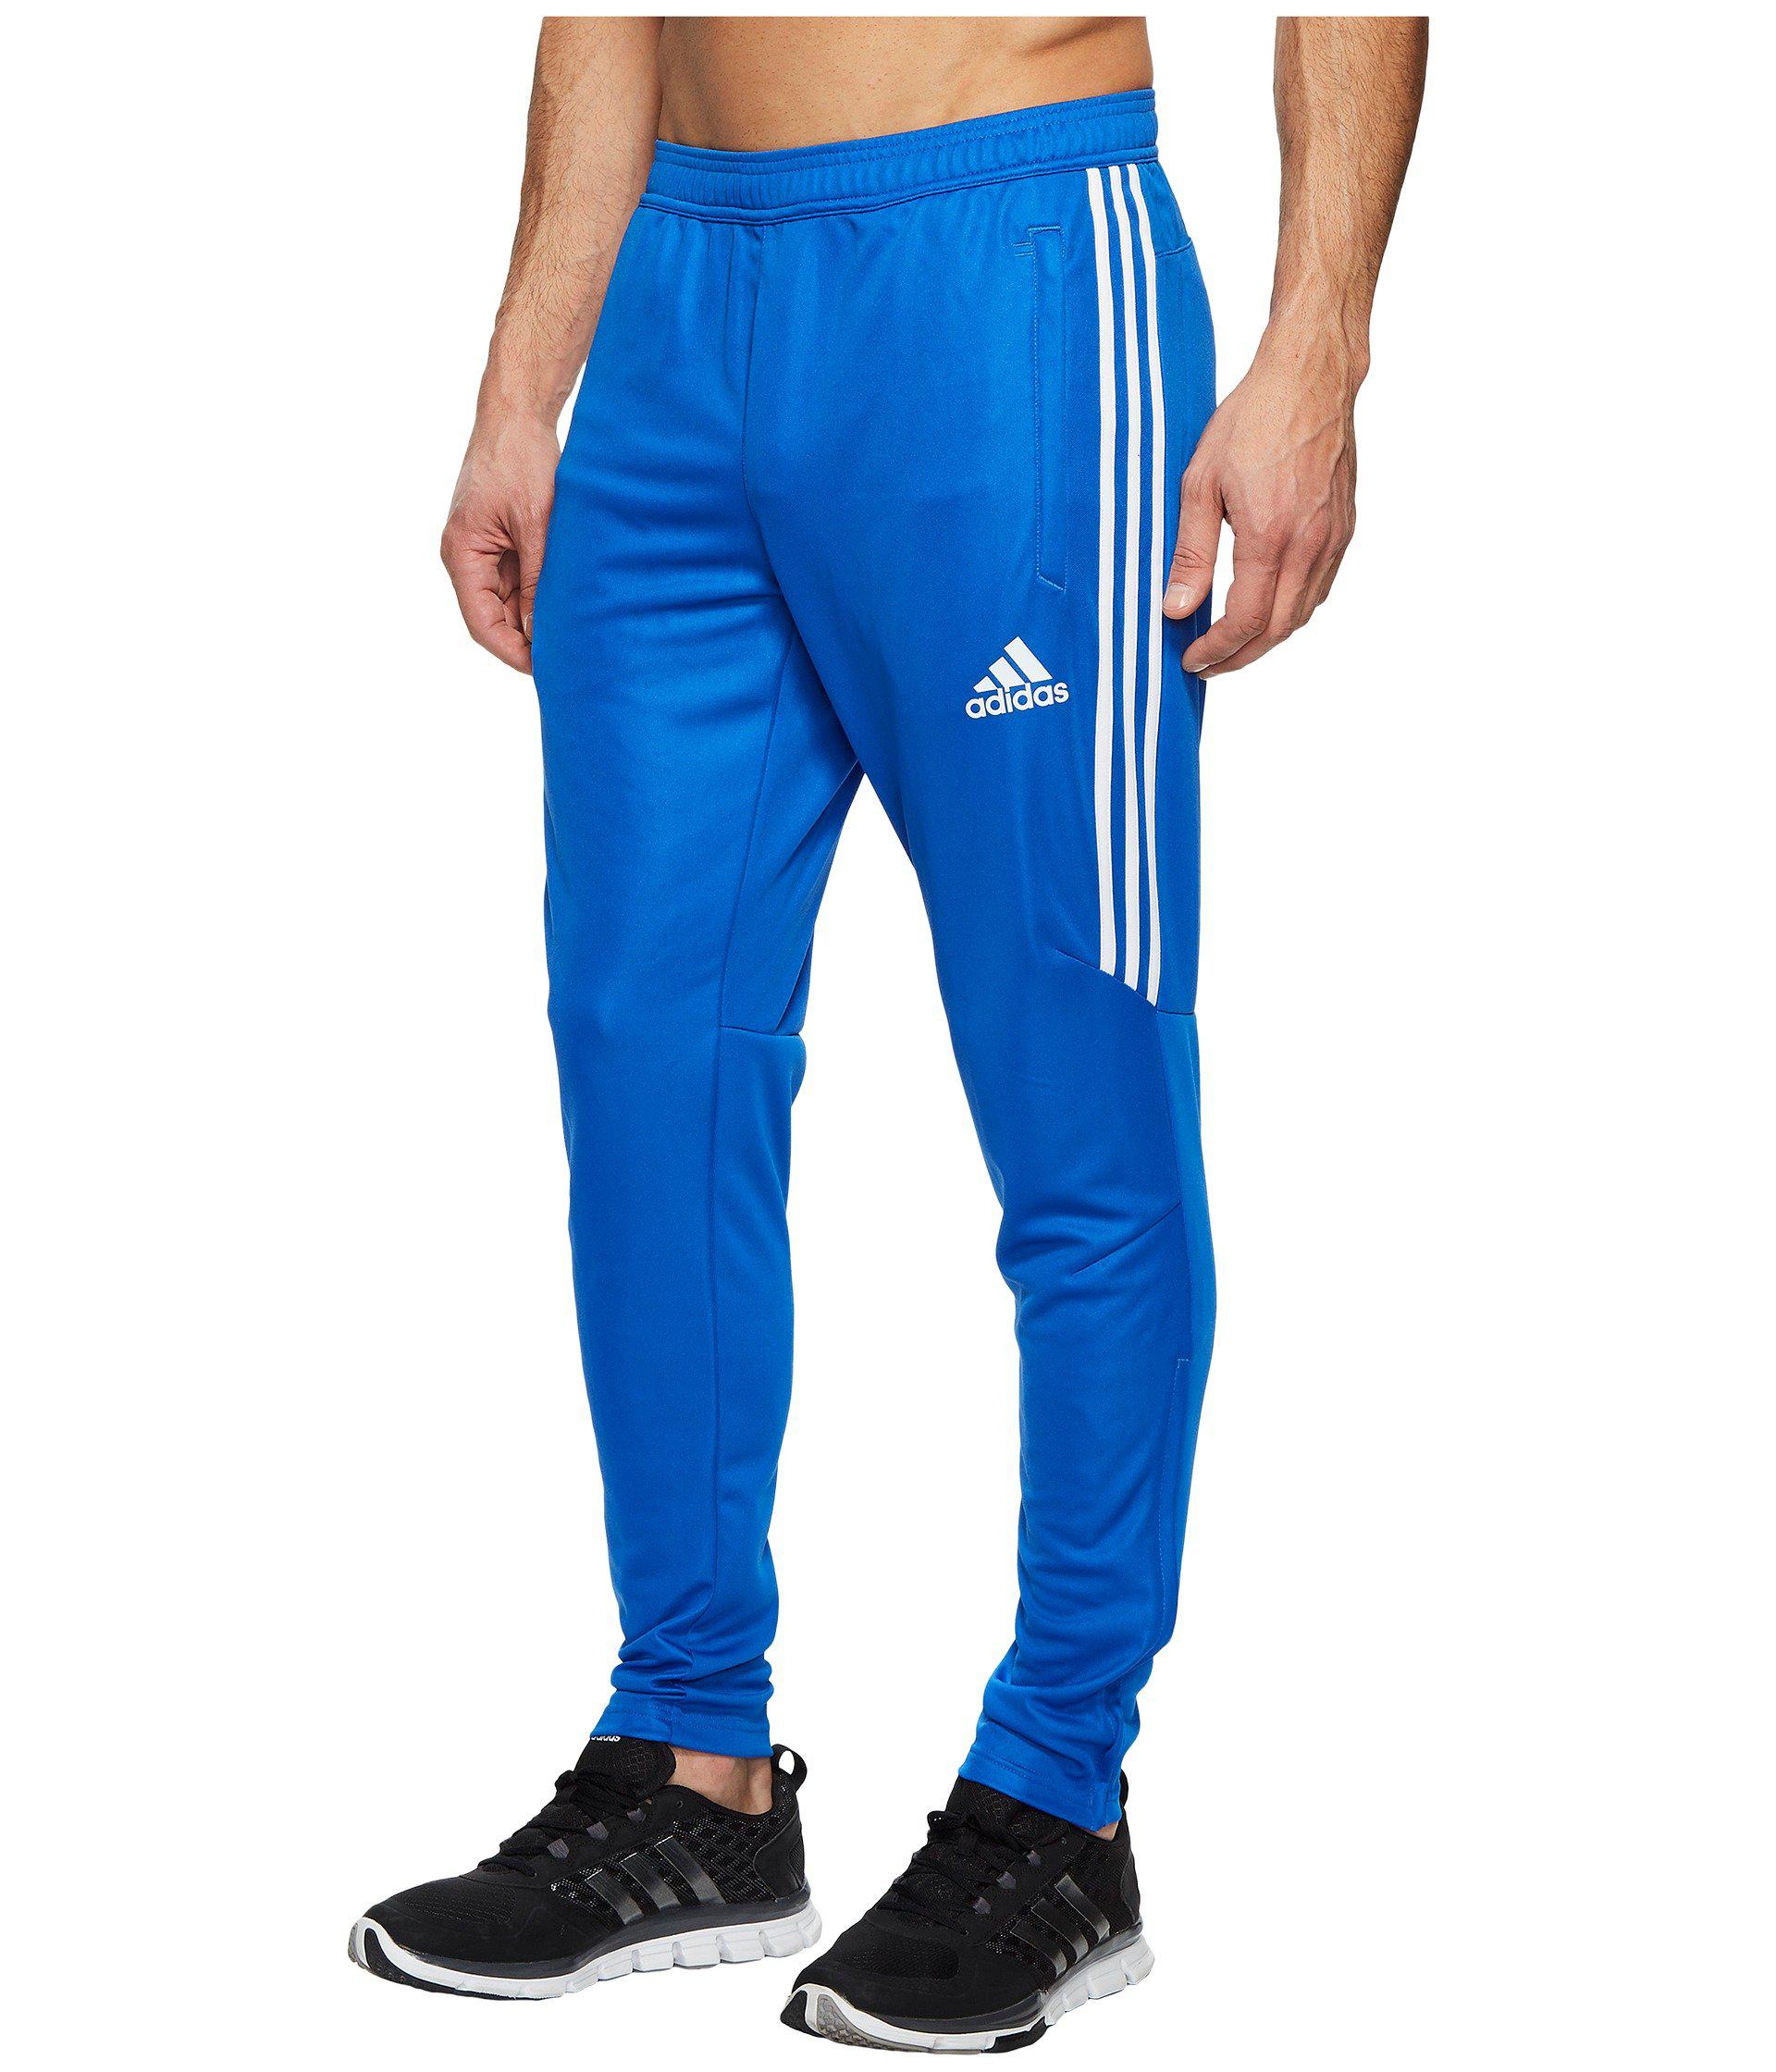 New Adidas Tiro 19 Climacool Men's Training Pants - Walmart.com